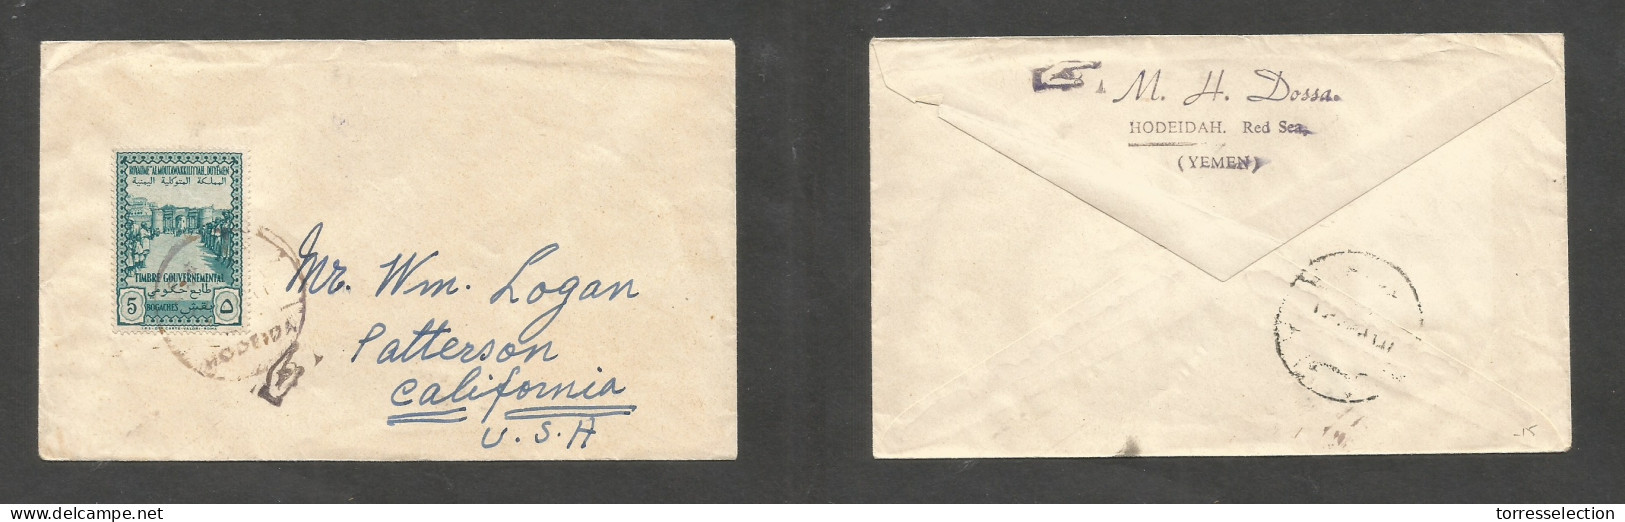 YEMEN. C. 1950s. Hodeida - USA, CA, Patterson. 5 Bogaches Single Unseald Fkd Envelope, Violet Cachet + Transit Reverse. - Yemen